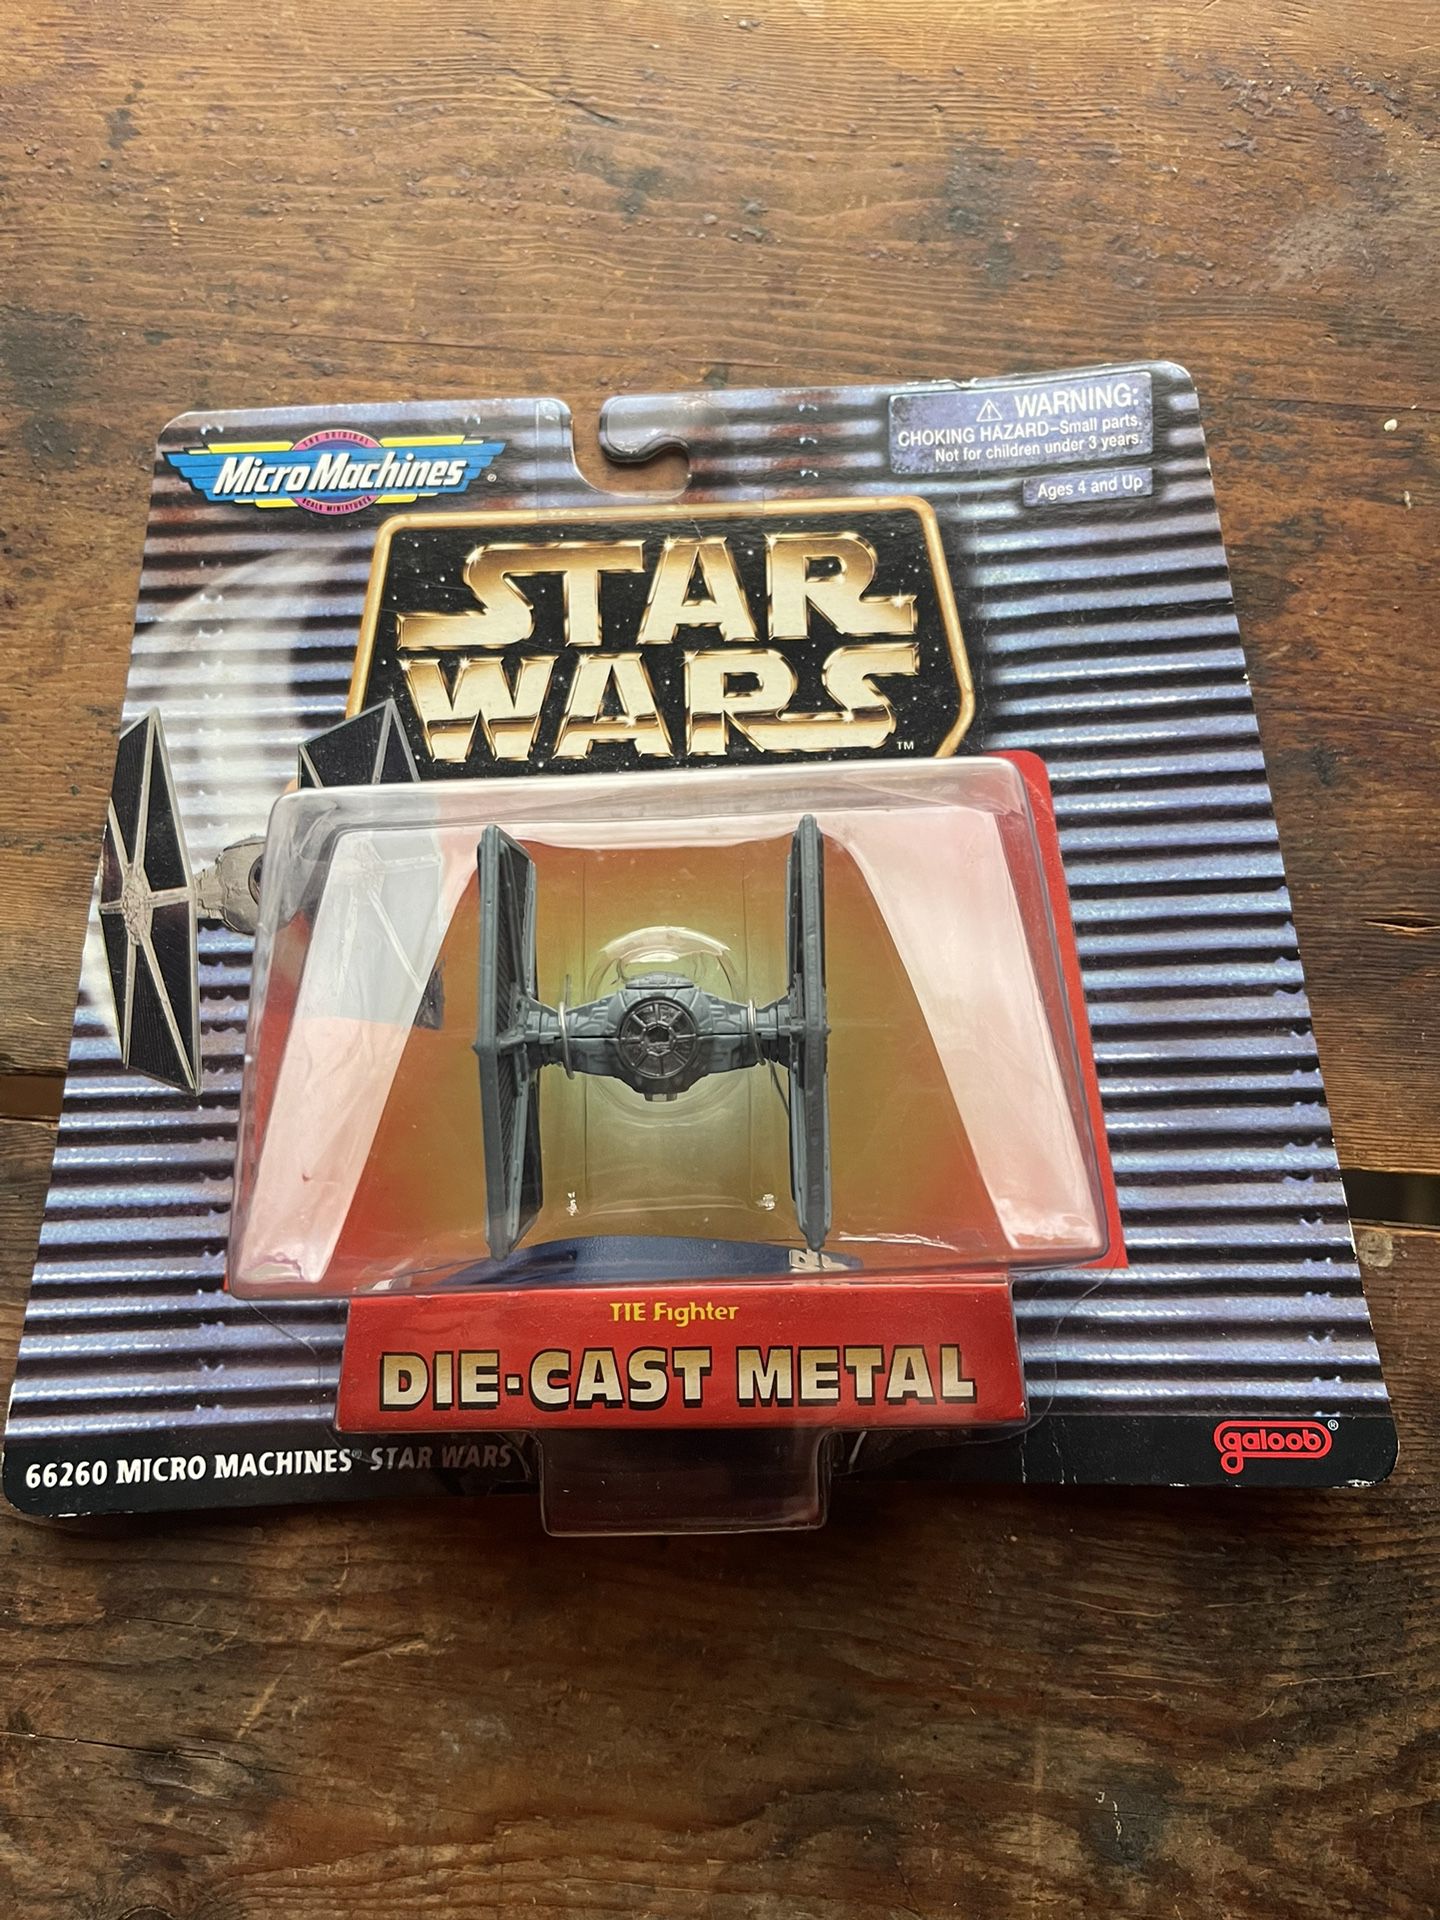 1996 Galoob Micro Machines Star Wars Tie Fighter Die Cast Metal - NEW open Box